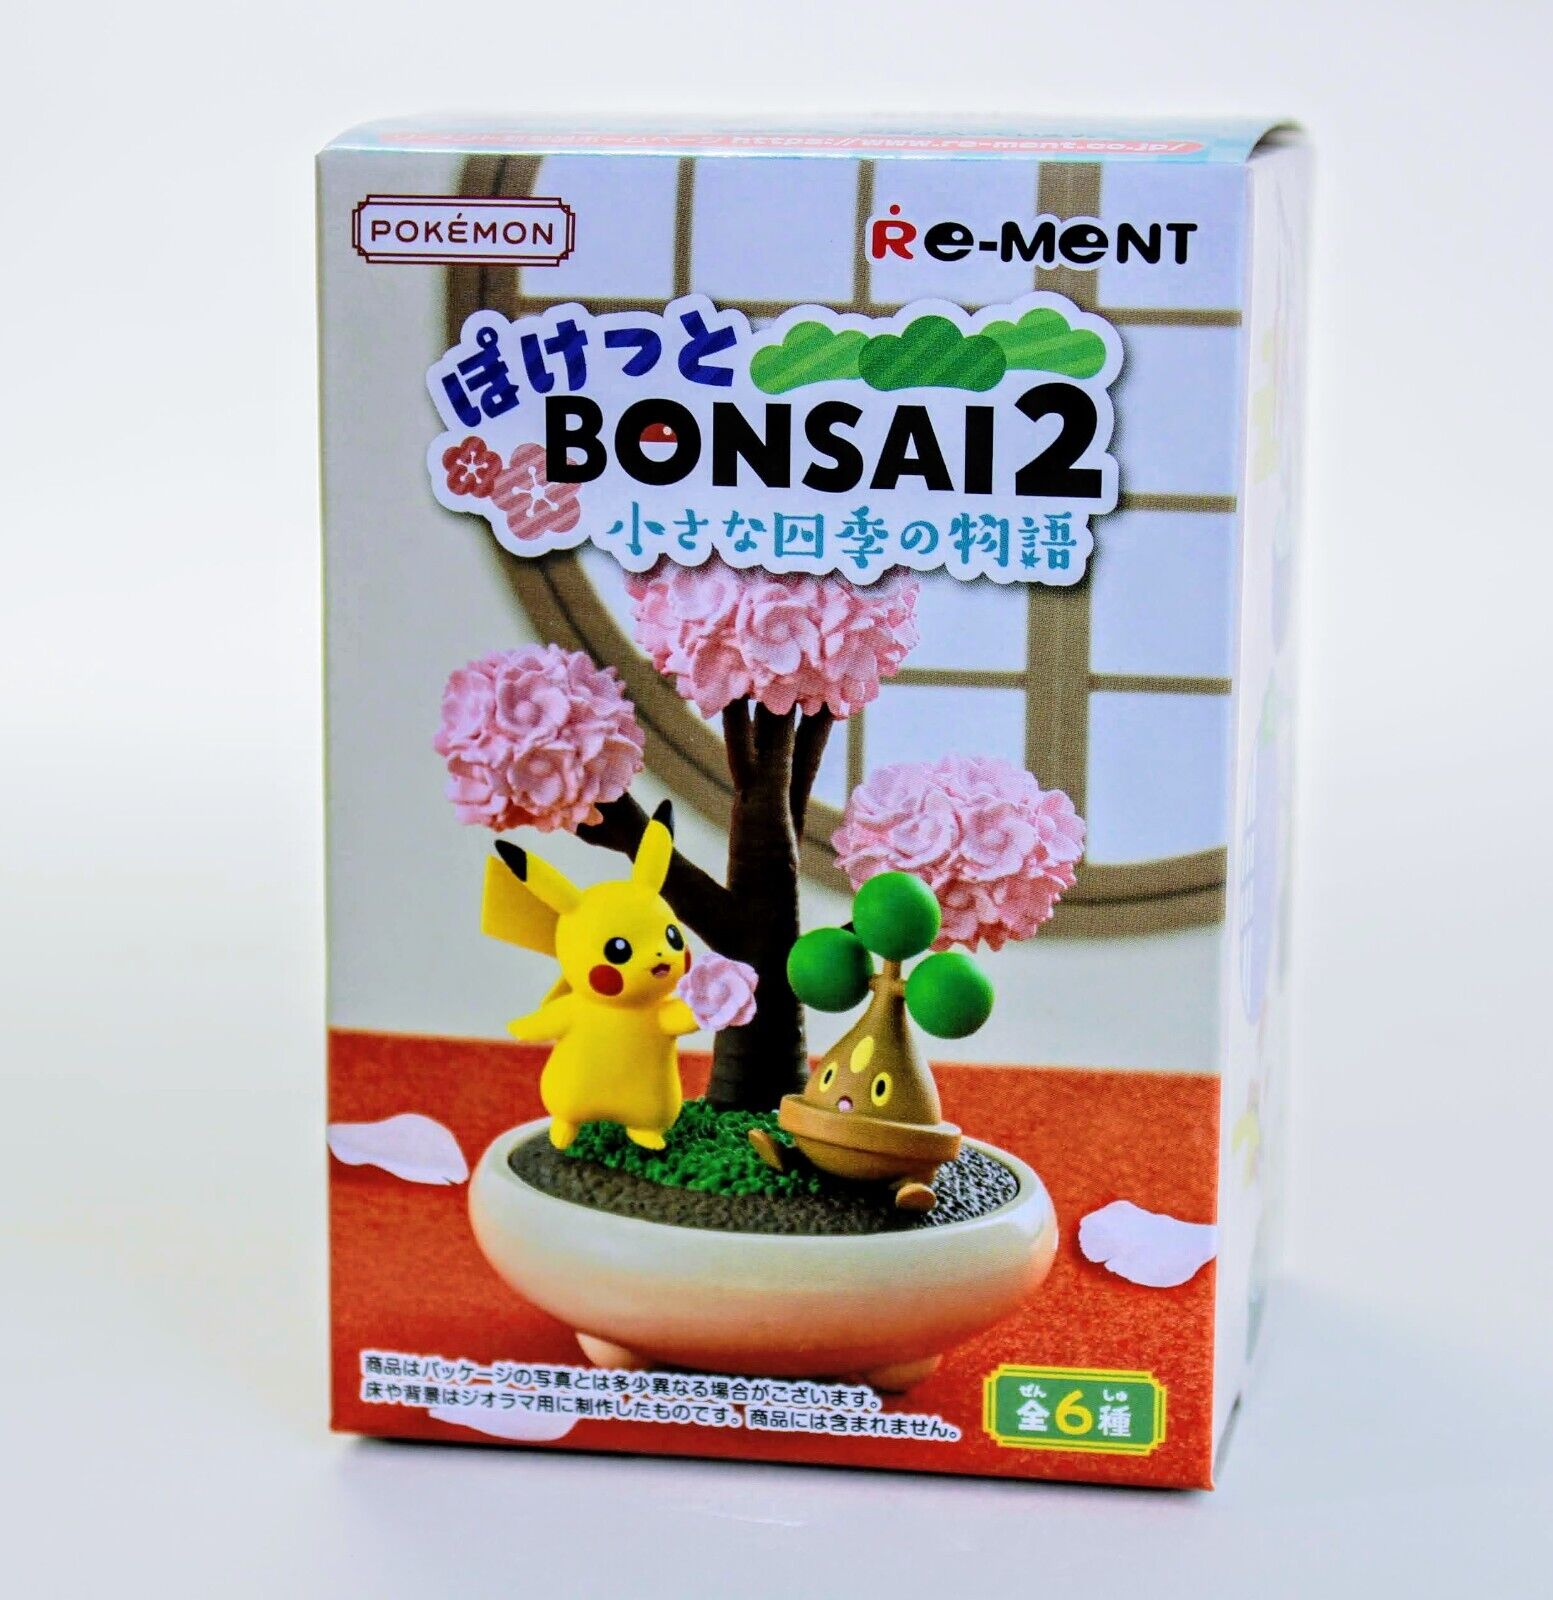 Re-ment Pokemon Bonsai 2 - Random Blind Box Figure Pikachu / Lugia / Squirtle ++